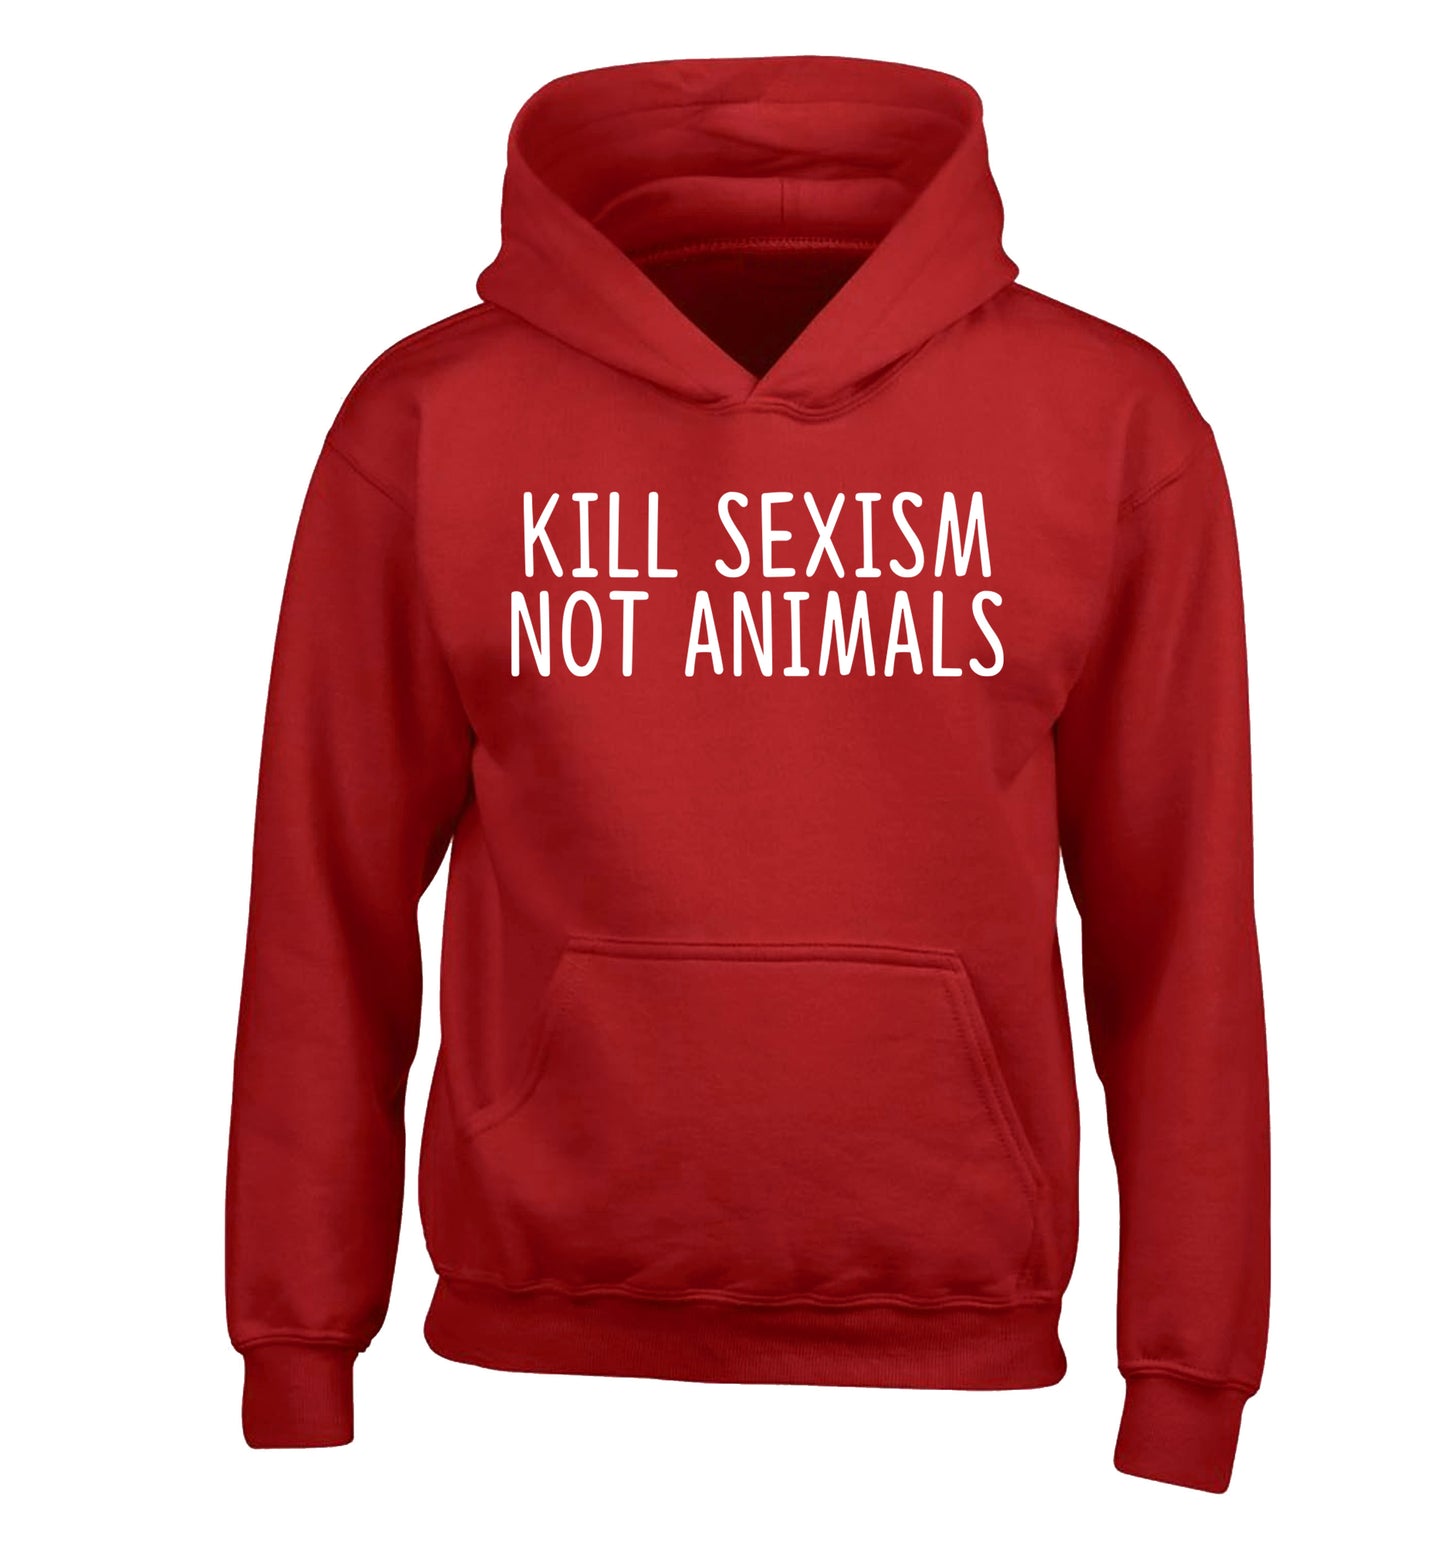 Kill Sexism Not Animals children's red hoodie 12-13 Years